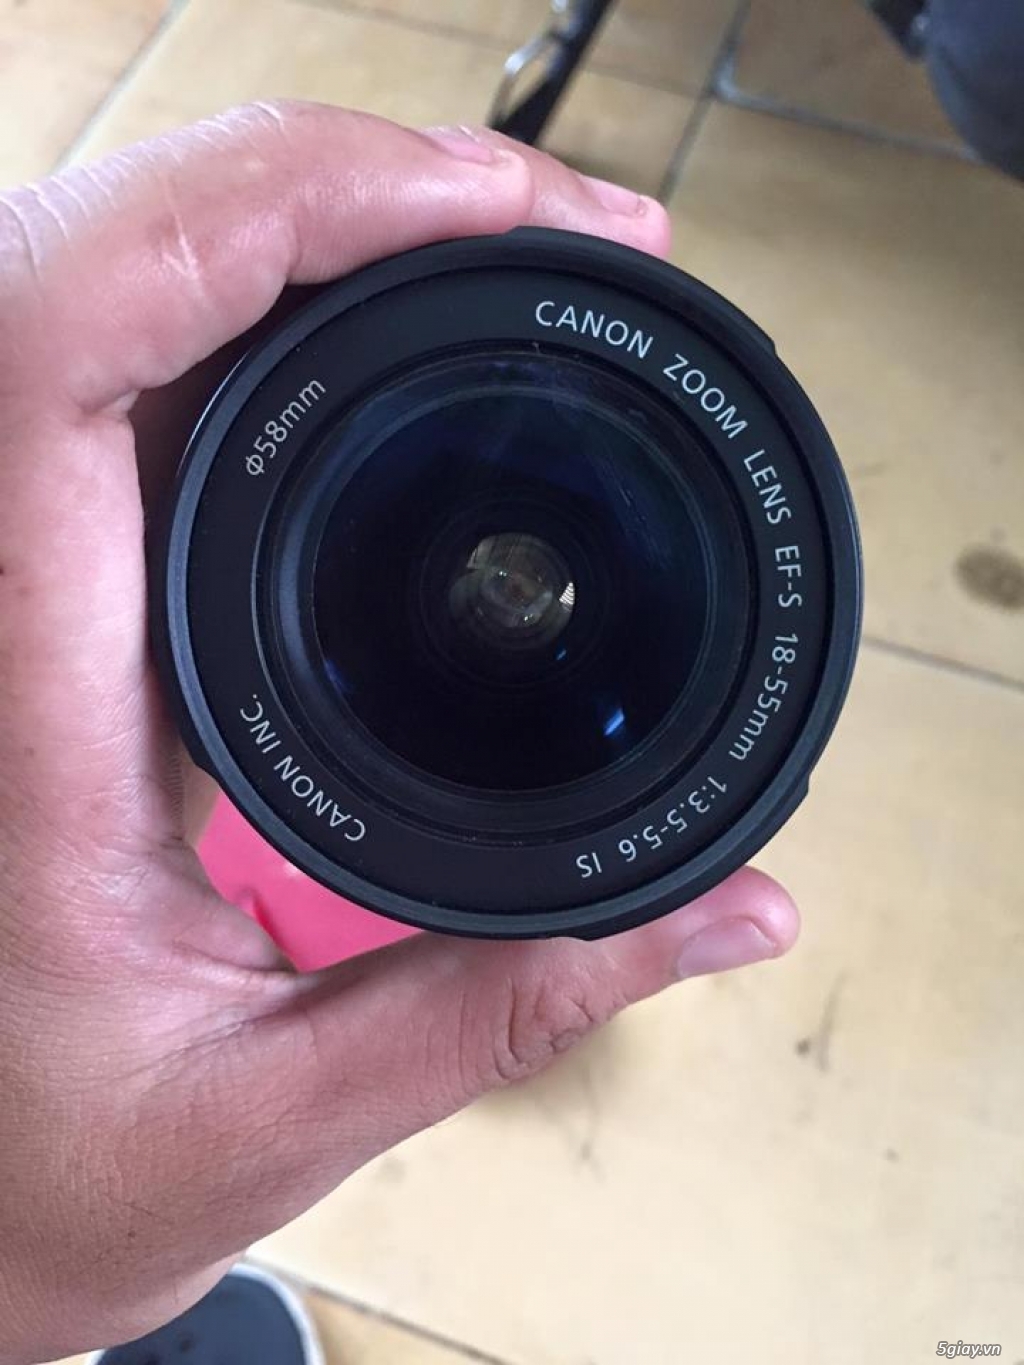 cần bán cái lens canon EFS 18-55mm 0.25m/0.8ft giá rẻ đây - 2